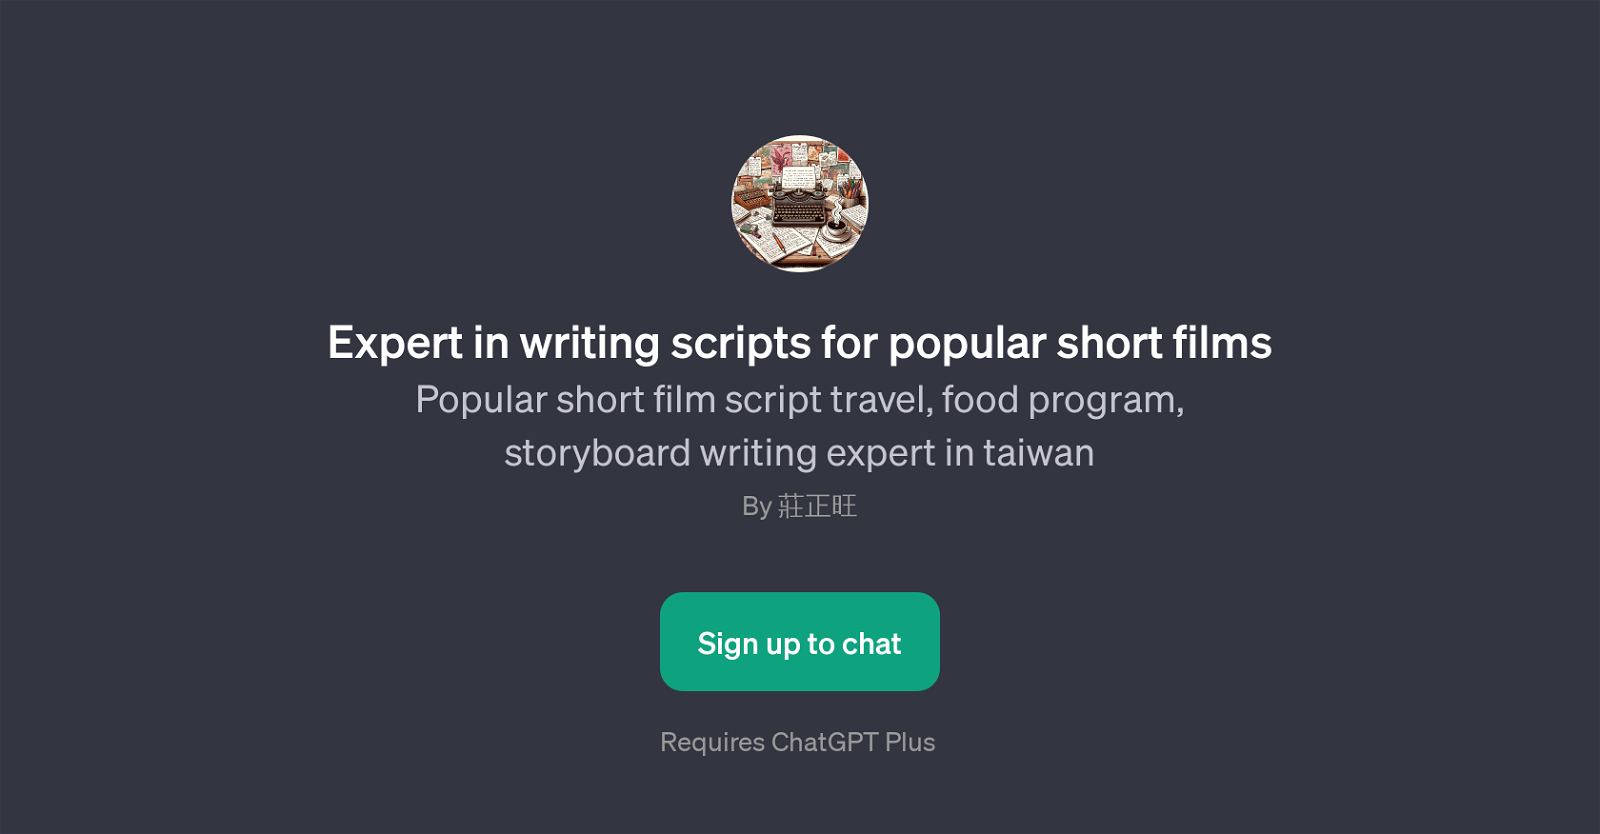 Expert in Writing Scripts for Popular Short Films website